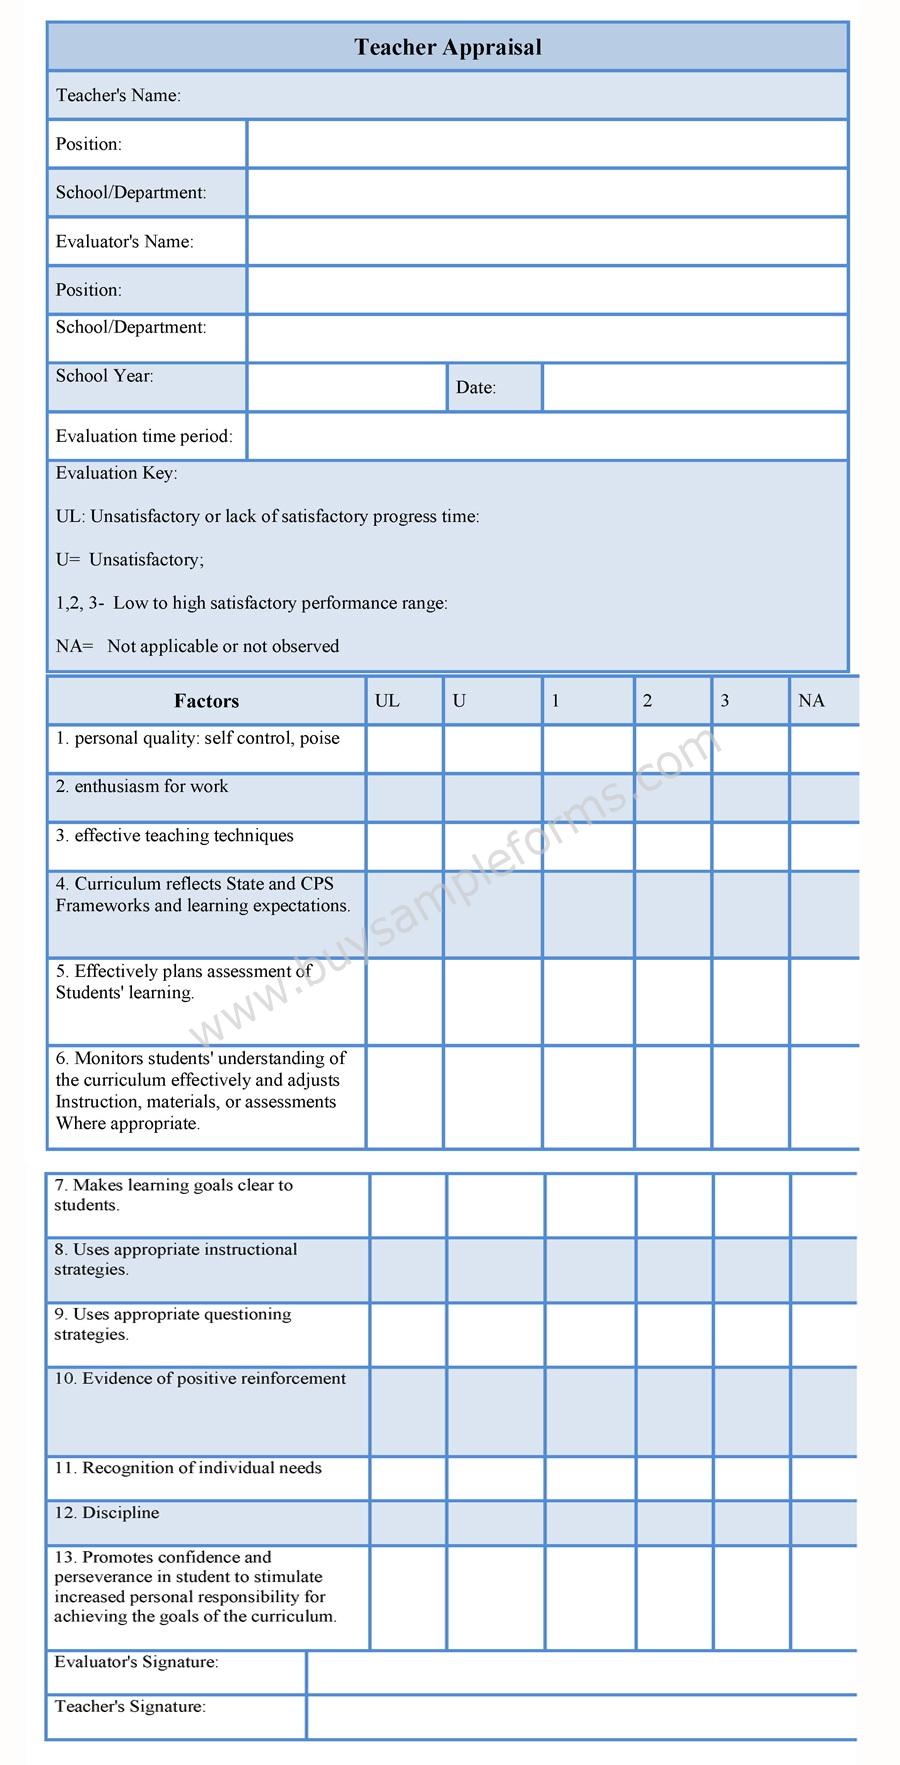 teacher-appraisal-form-teacher-form-sample